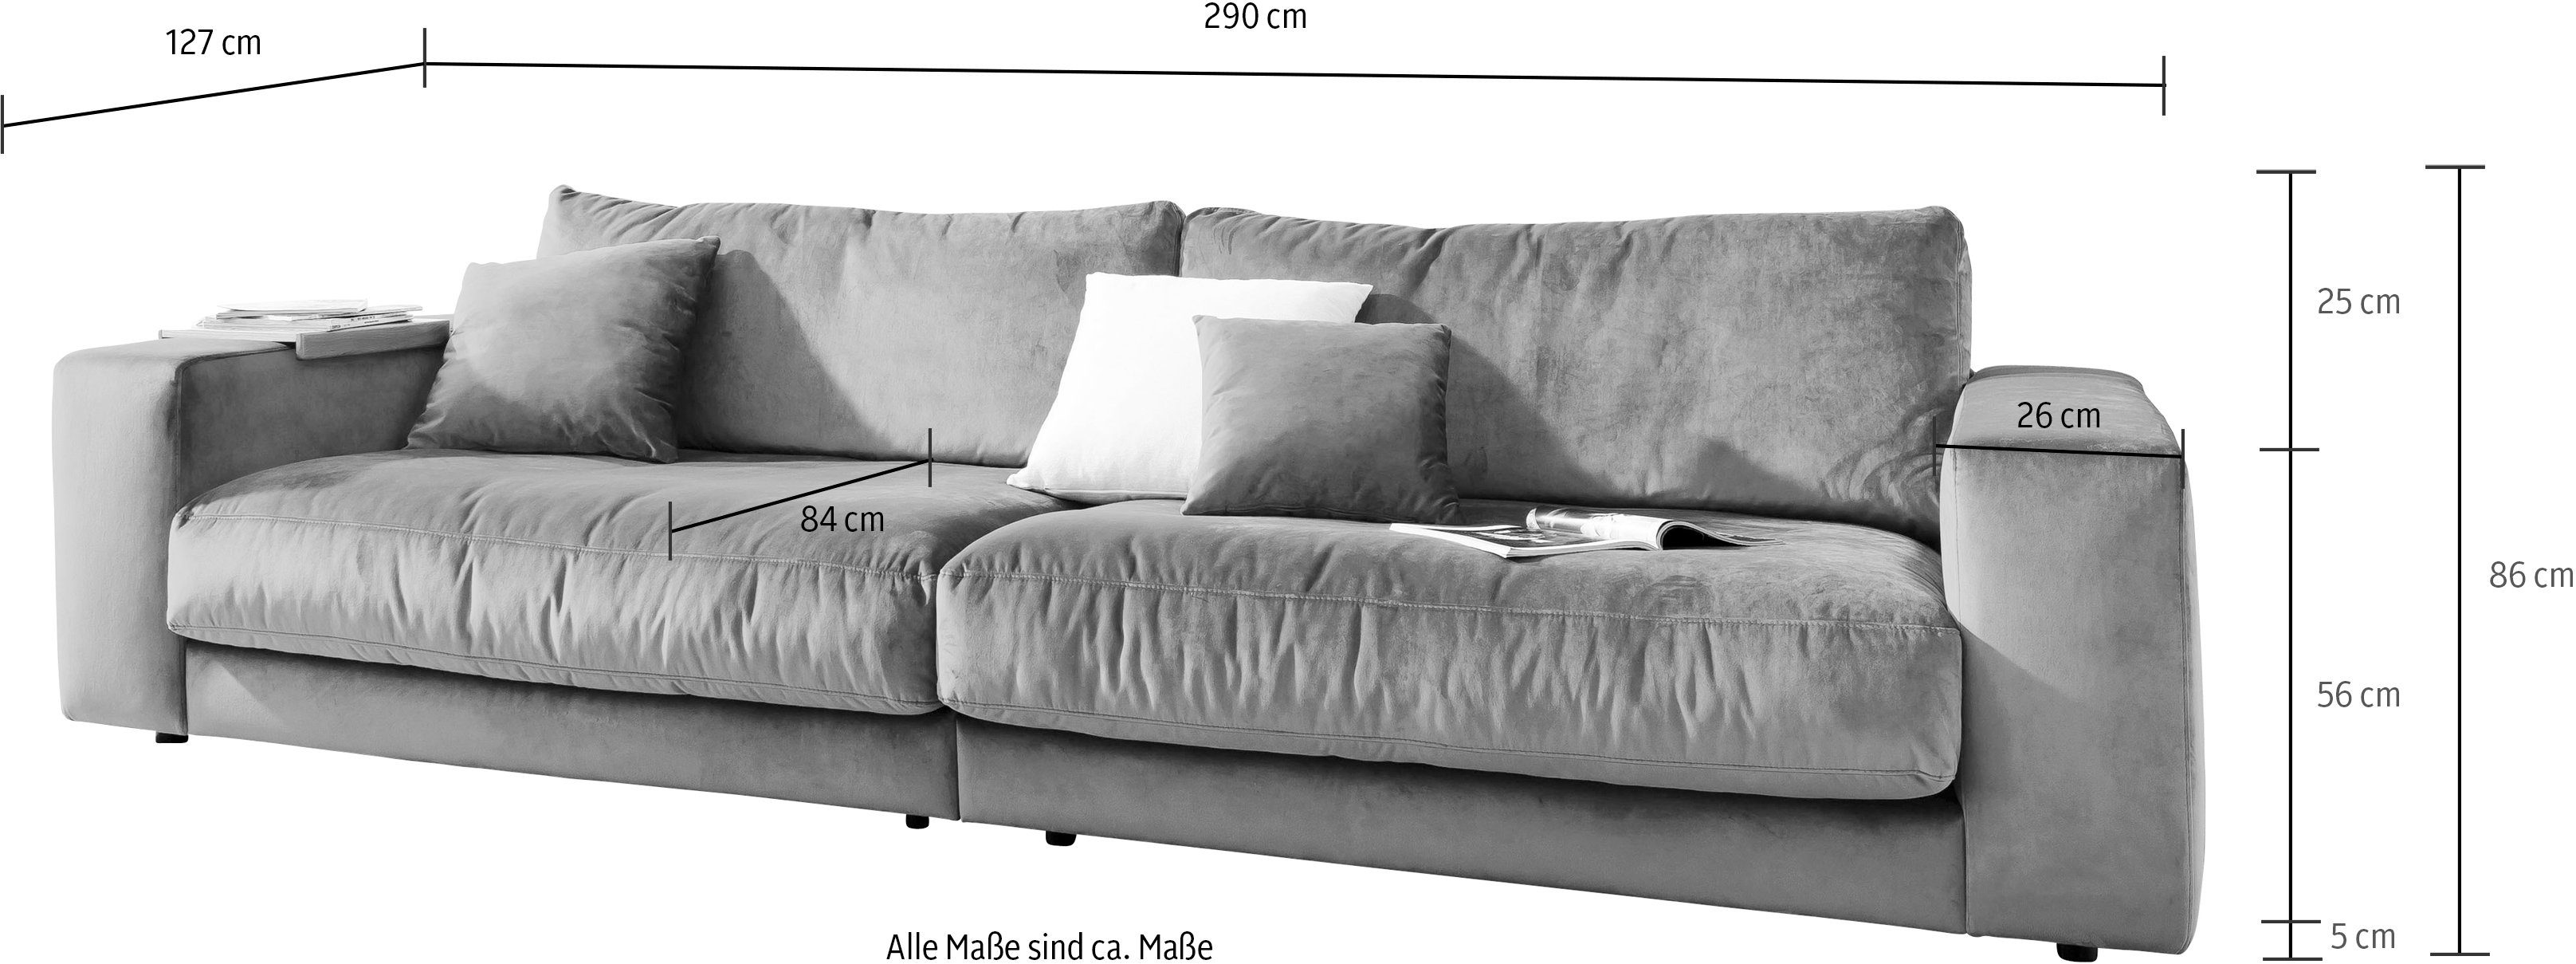 Flatterkissen, Enisa Candy Big-Sofa Easy 1 incl. care II, Flecken-Schutz-Bezug 3C mit Wahlweise